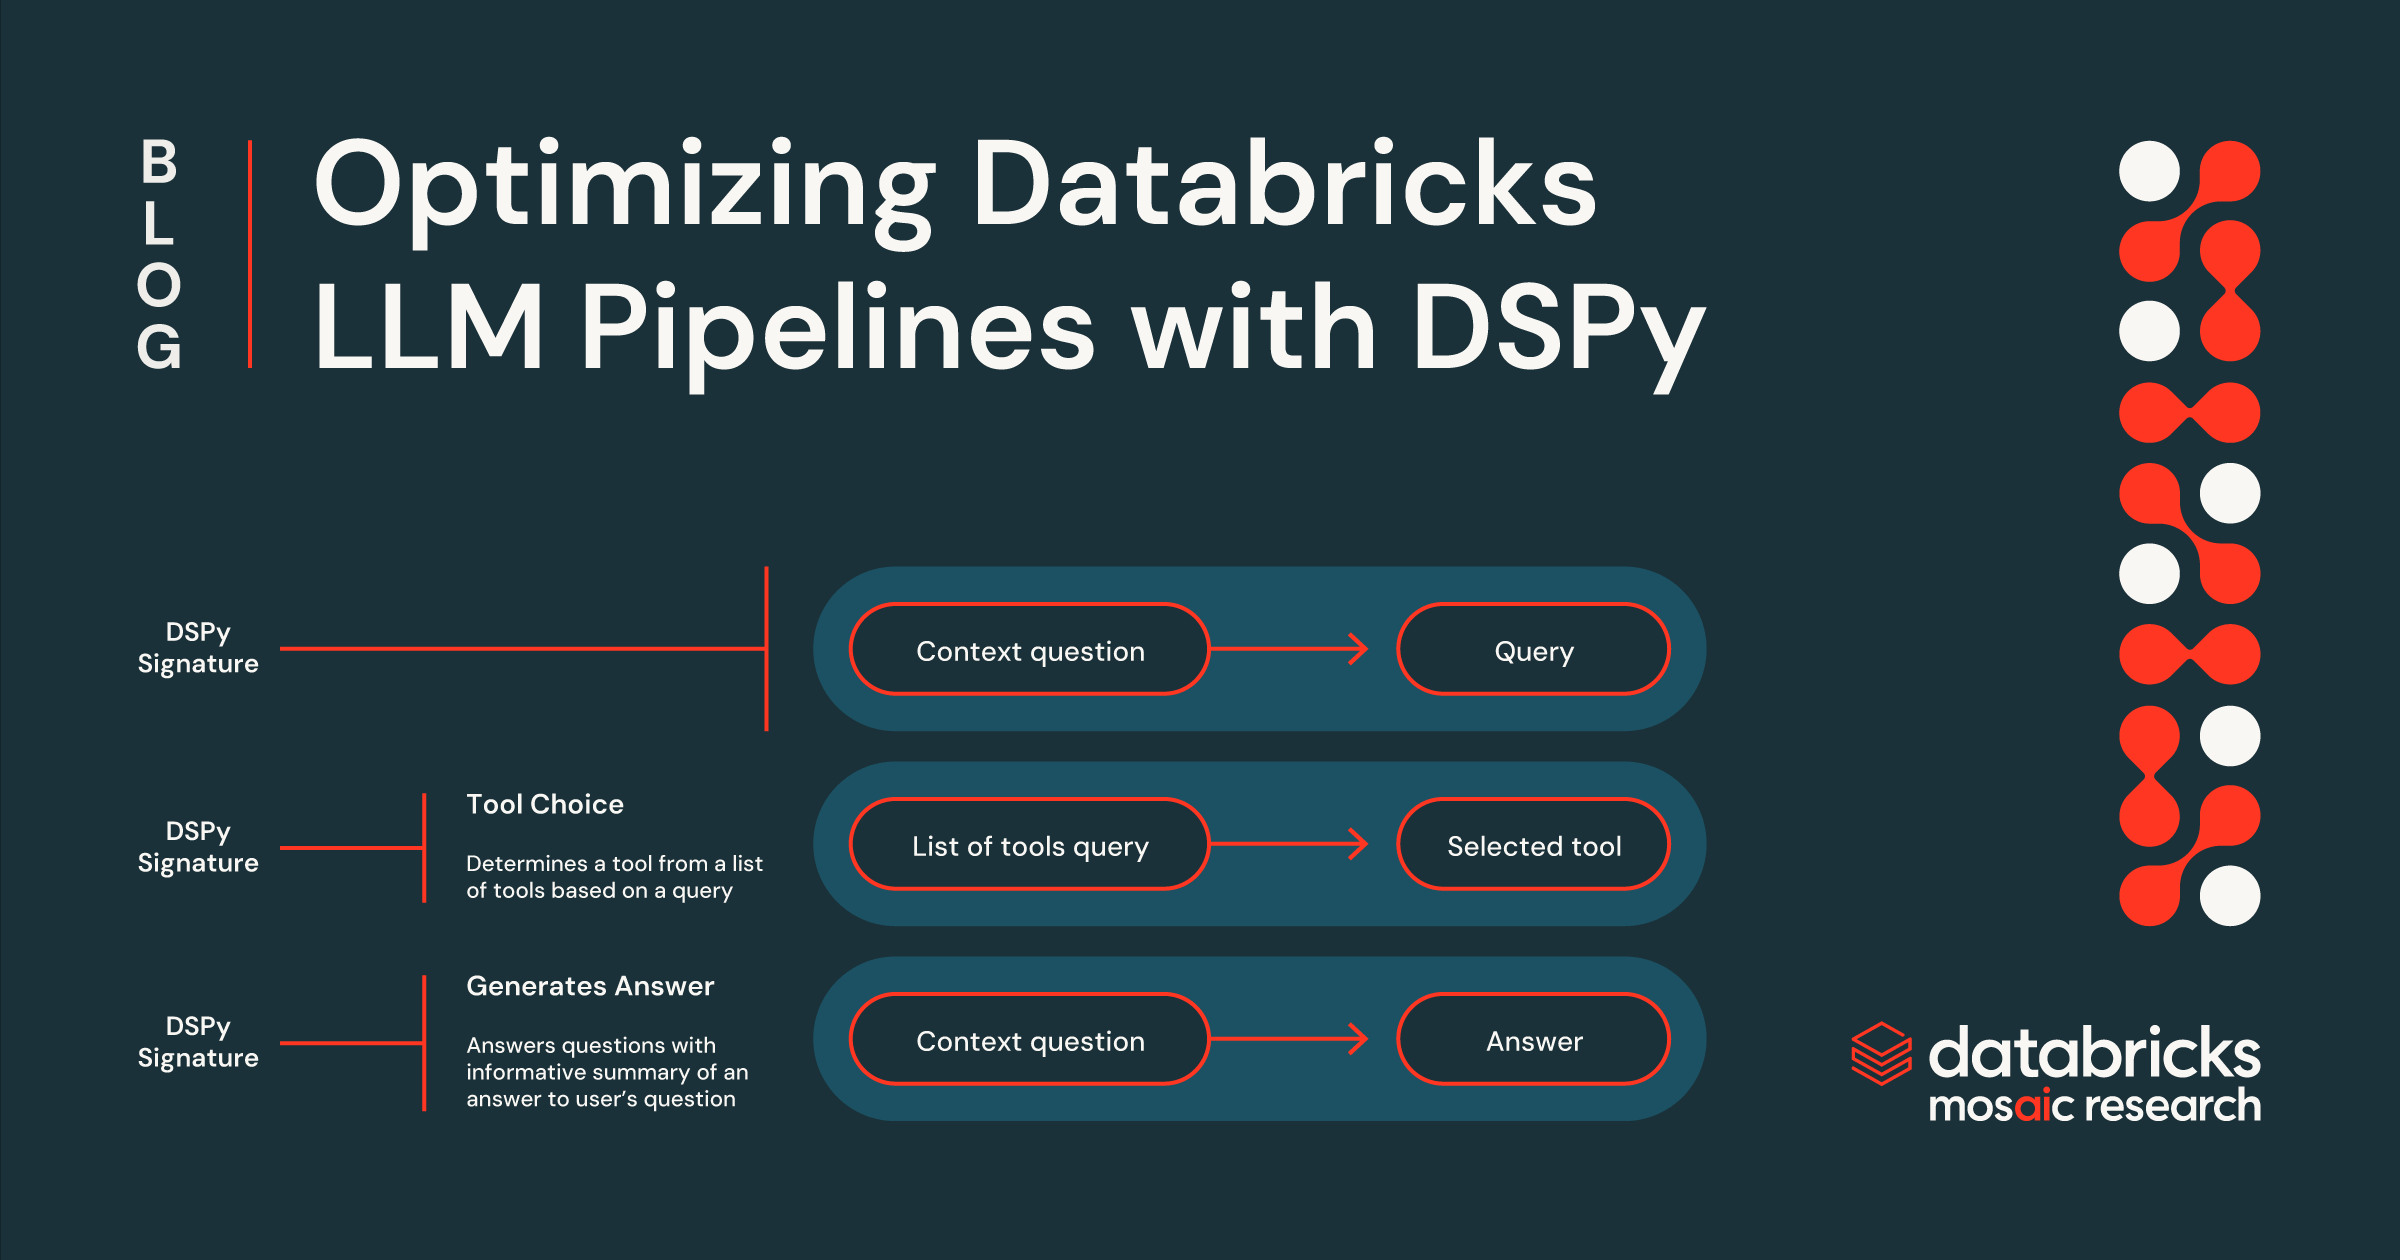 Optimizing Databricks LLM Pipelines with DSPy